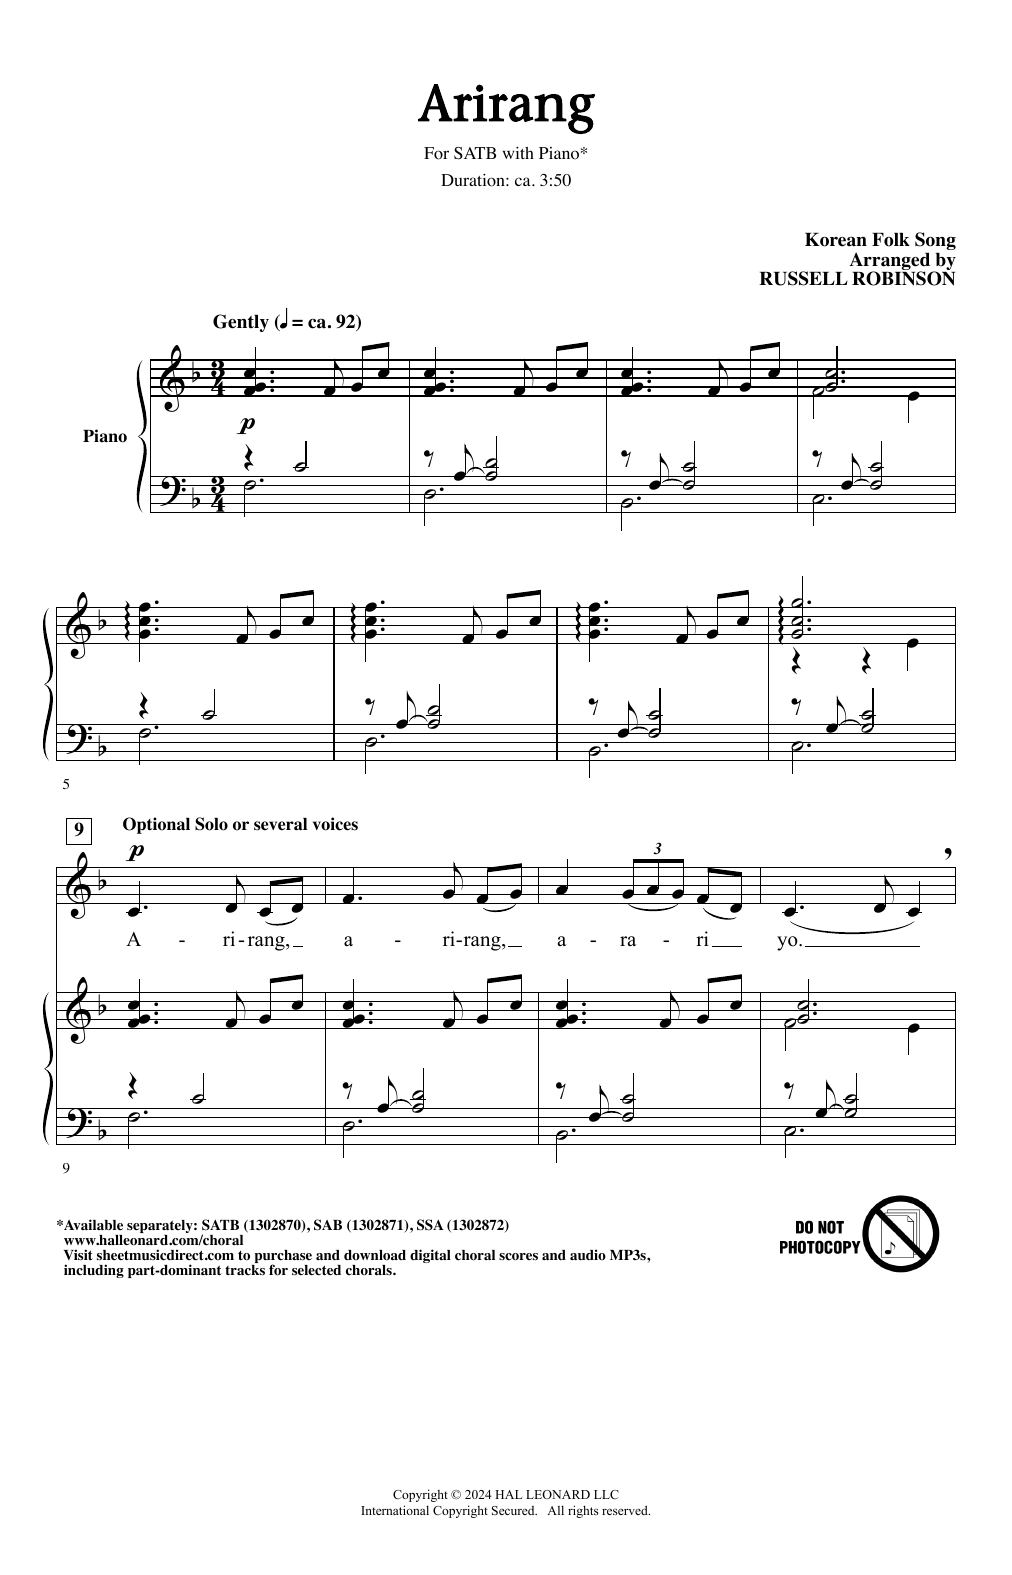 Korean folk song Arirang (arr. Russell Robinson) Sheet Music Notes & Chords for SATB Choir - Download or Print PDF